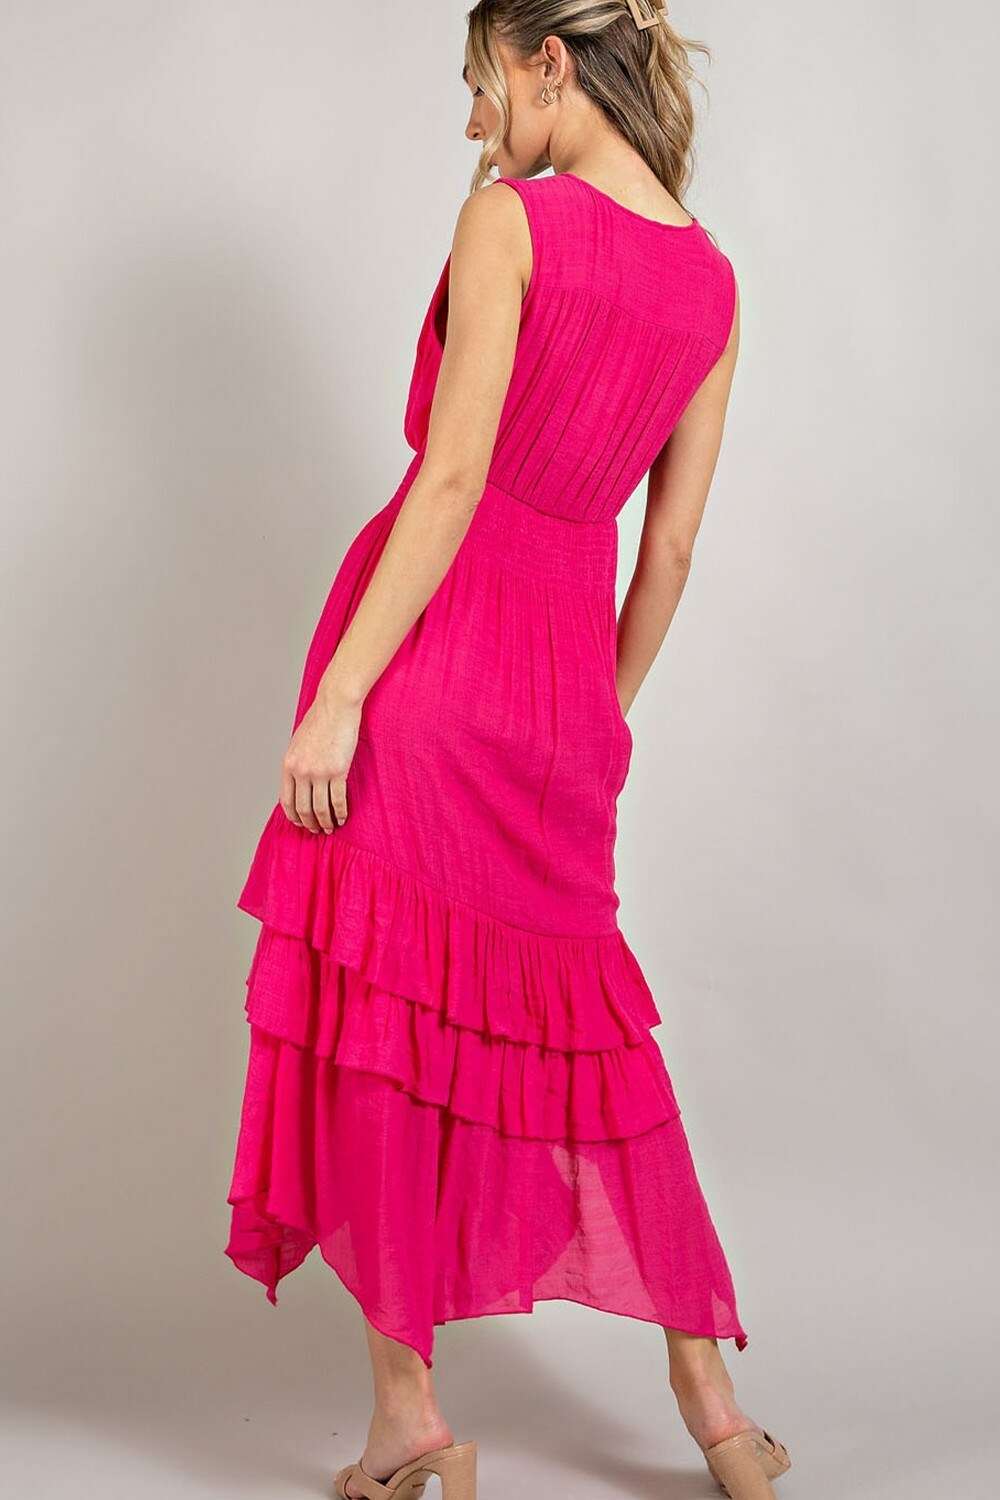 Hot Pink Ruffle Maxi Dress_Large_Dresses_The Floral Fixx_The Floral Fixx